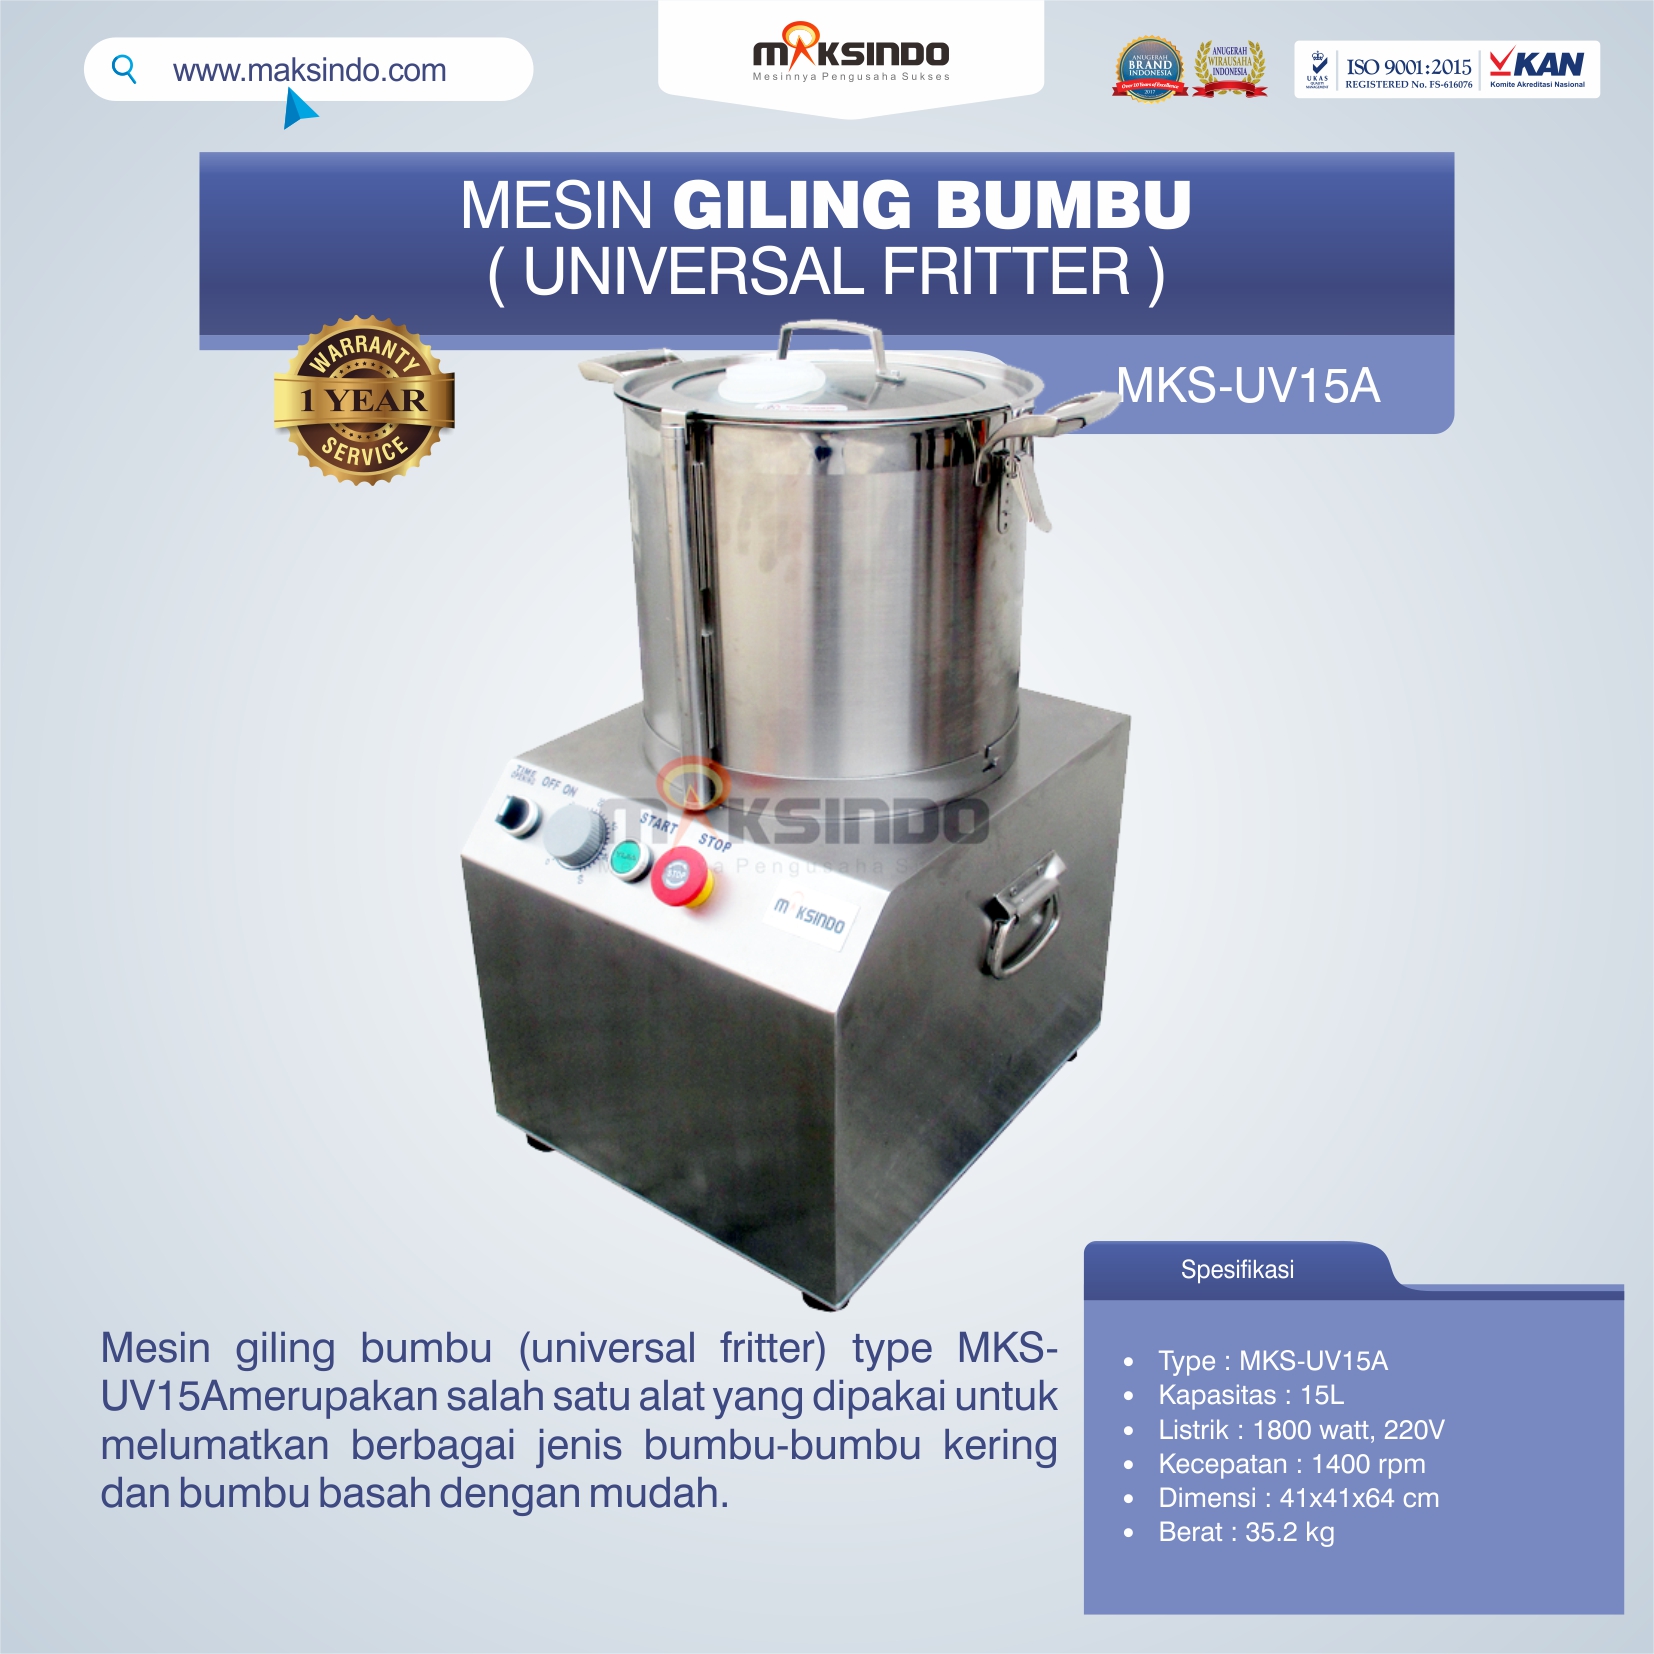 Jual Mesin Giling Bumbu (Universal Fritter) MKS-UV15A di Bali